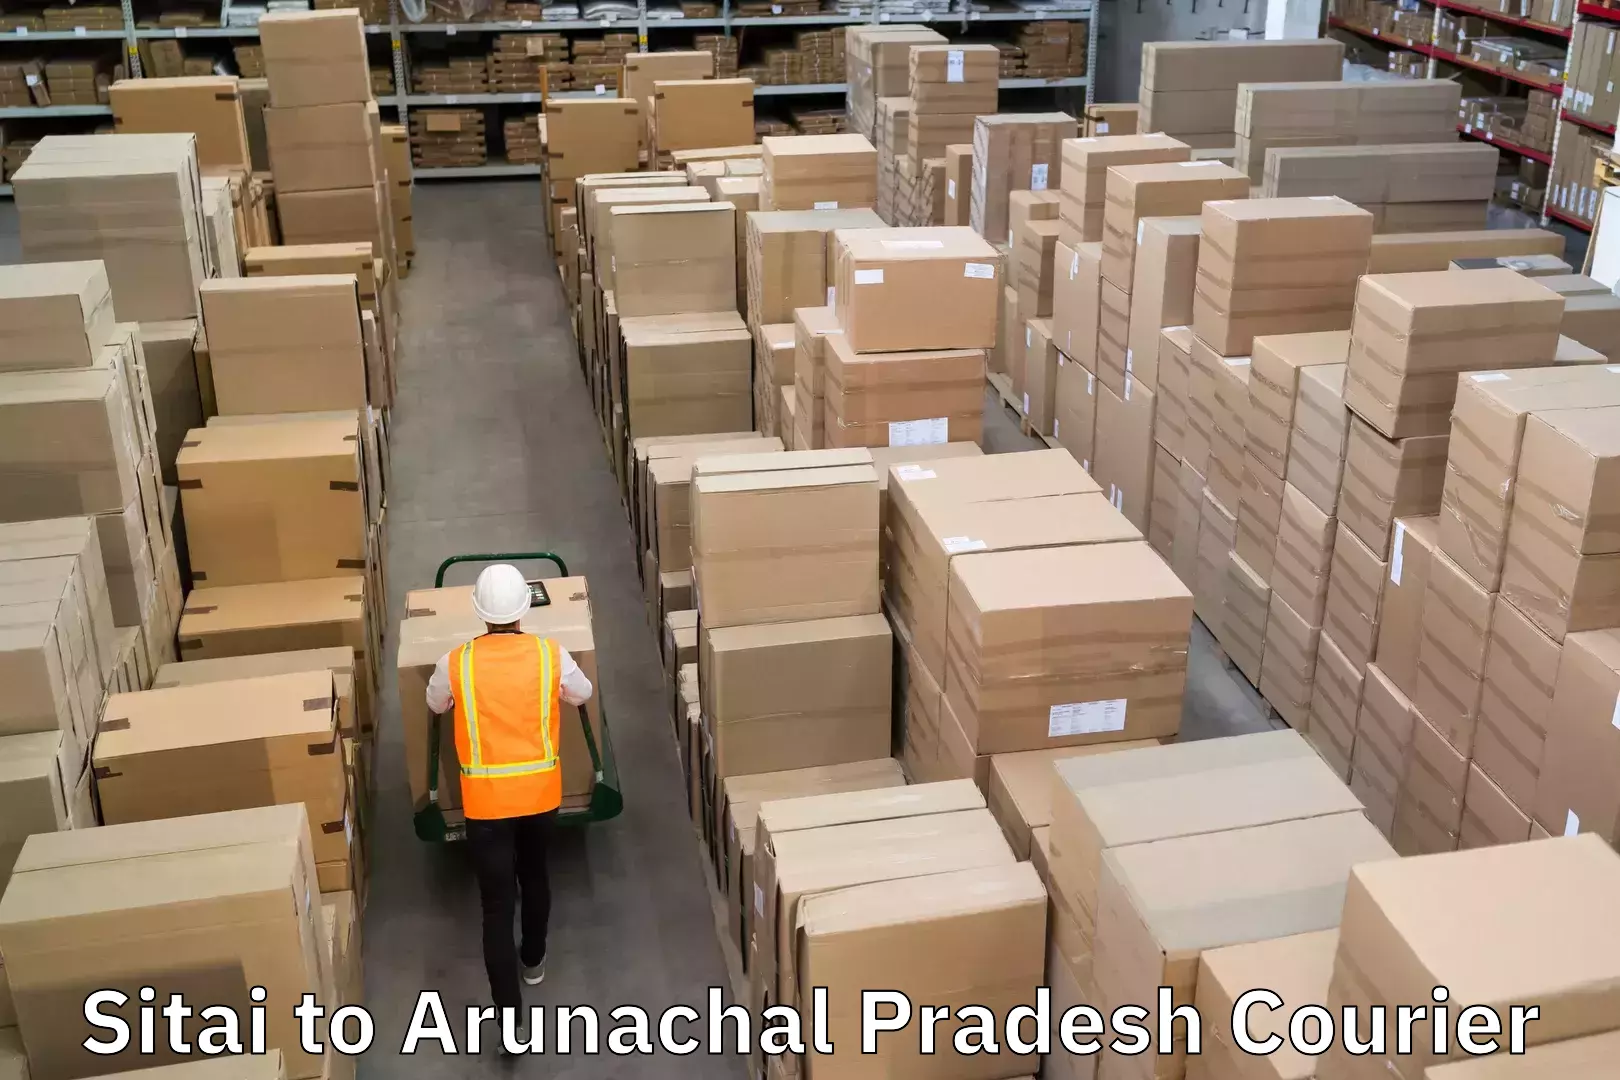 Courier service comparison Sitai to Arunachal Pradesh